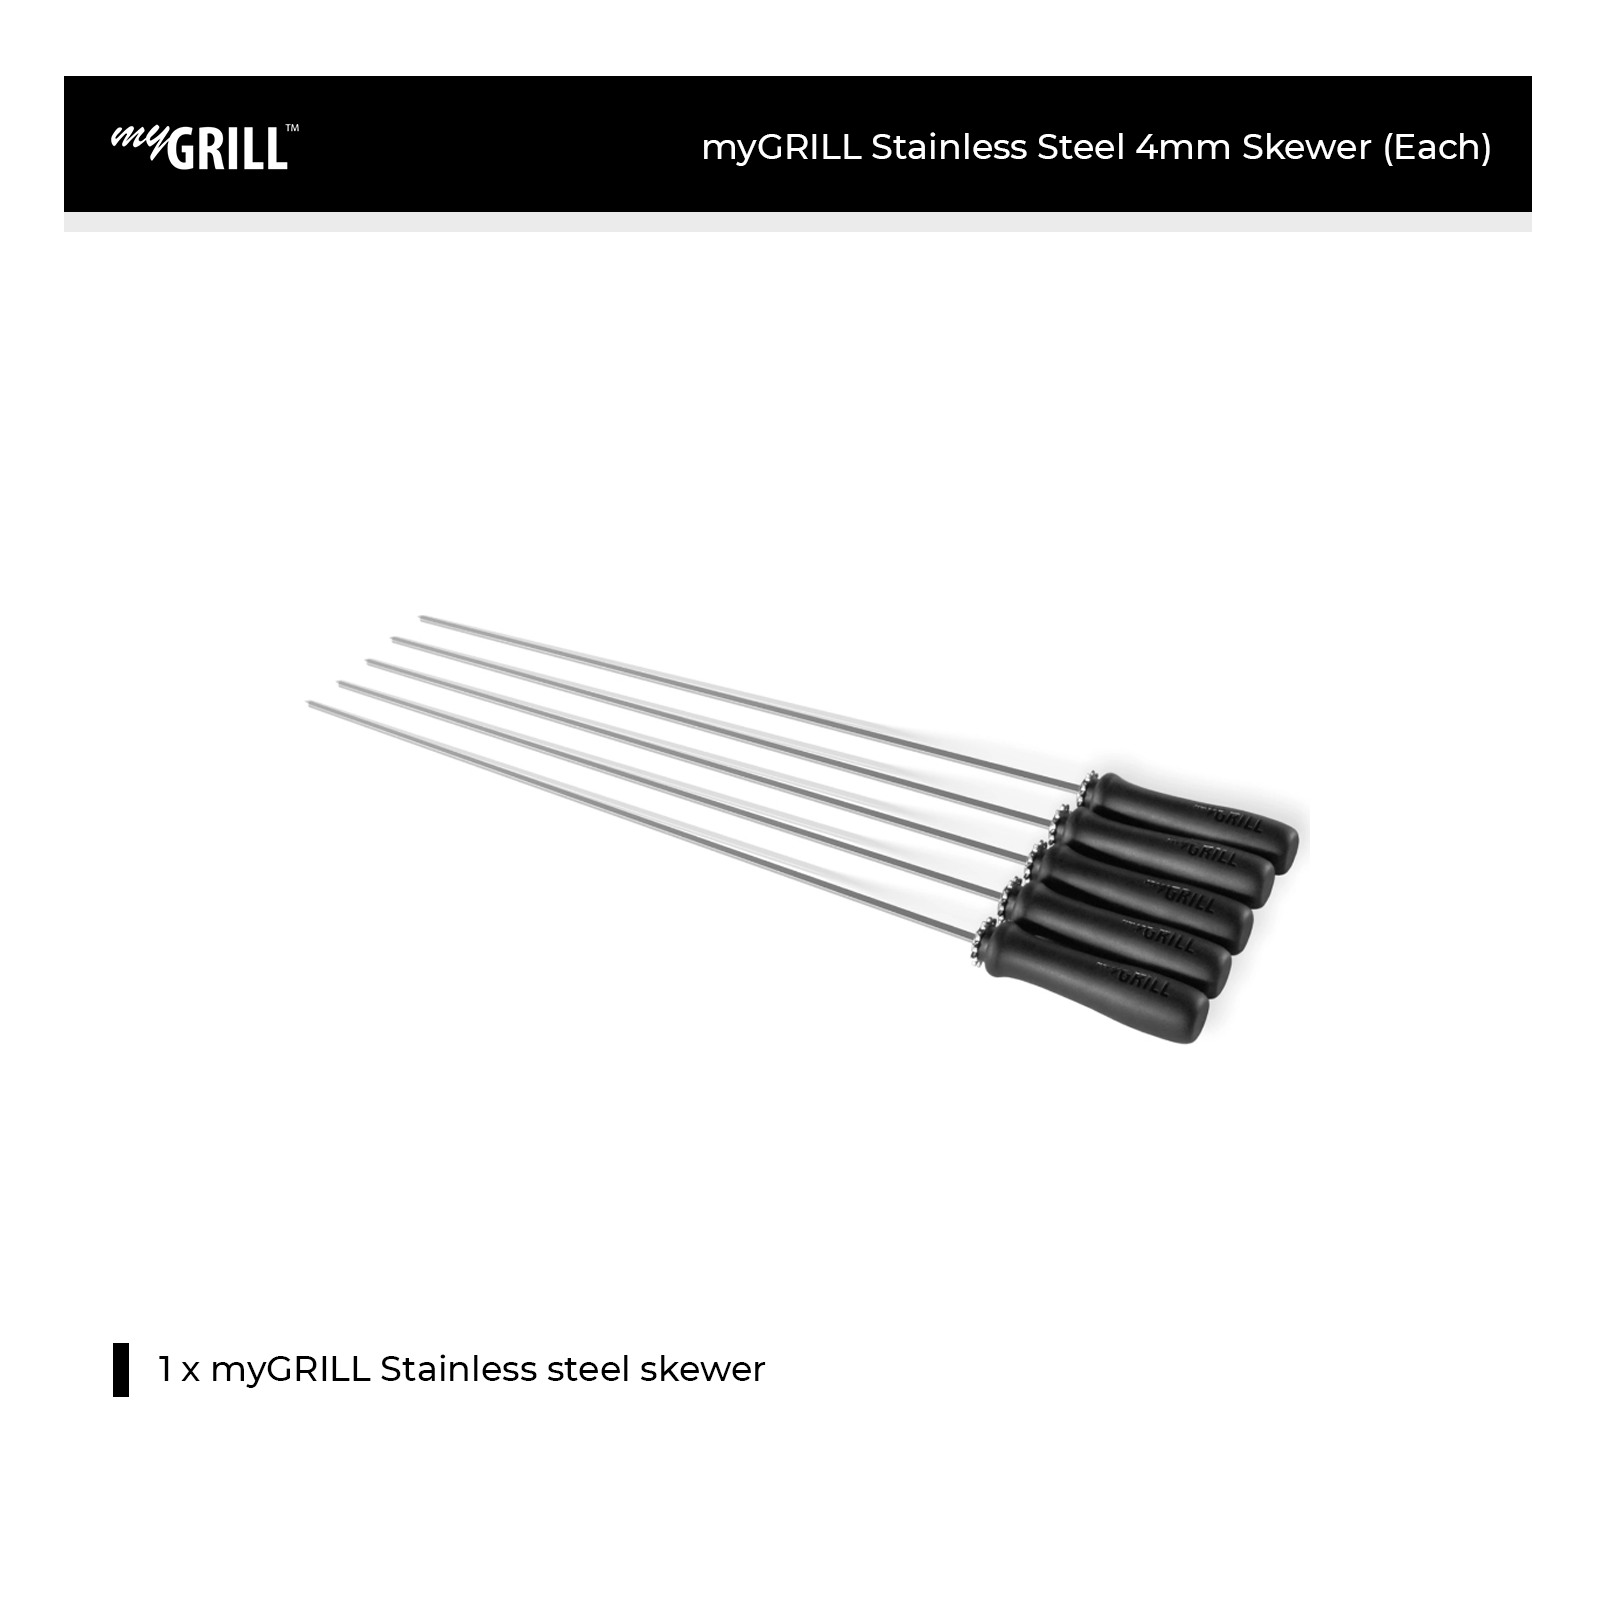 myGRILL Stainless Steel 4mm Skewer (Each) - 950010-21010040